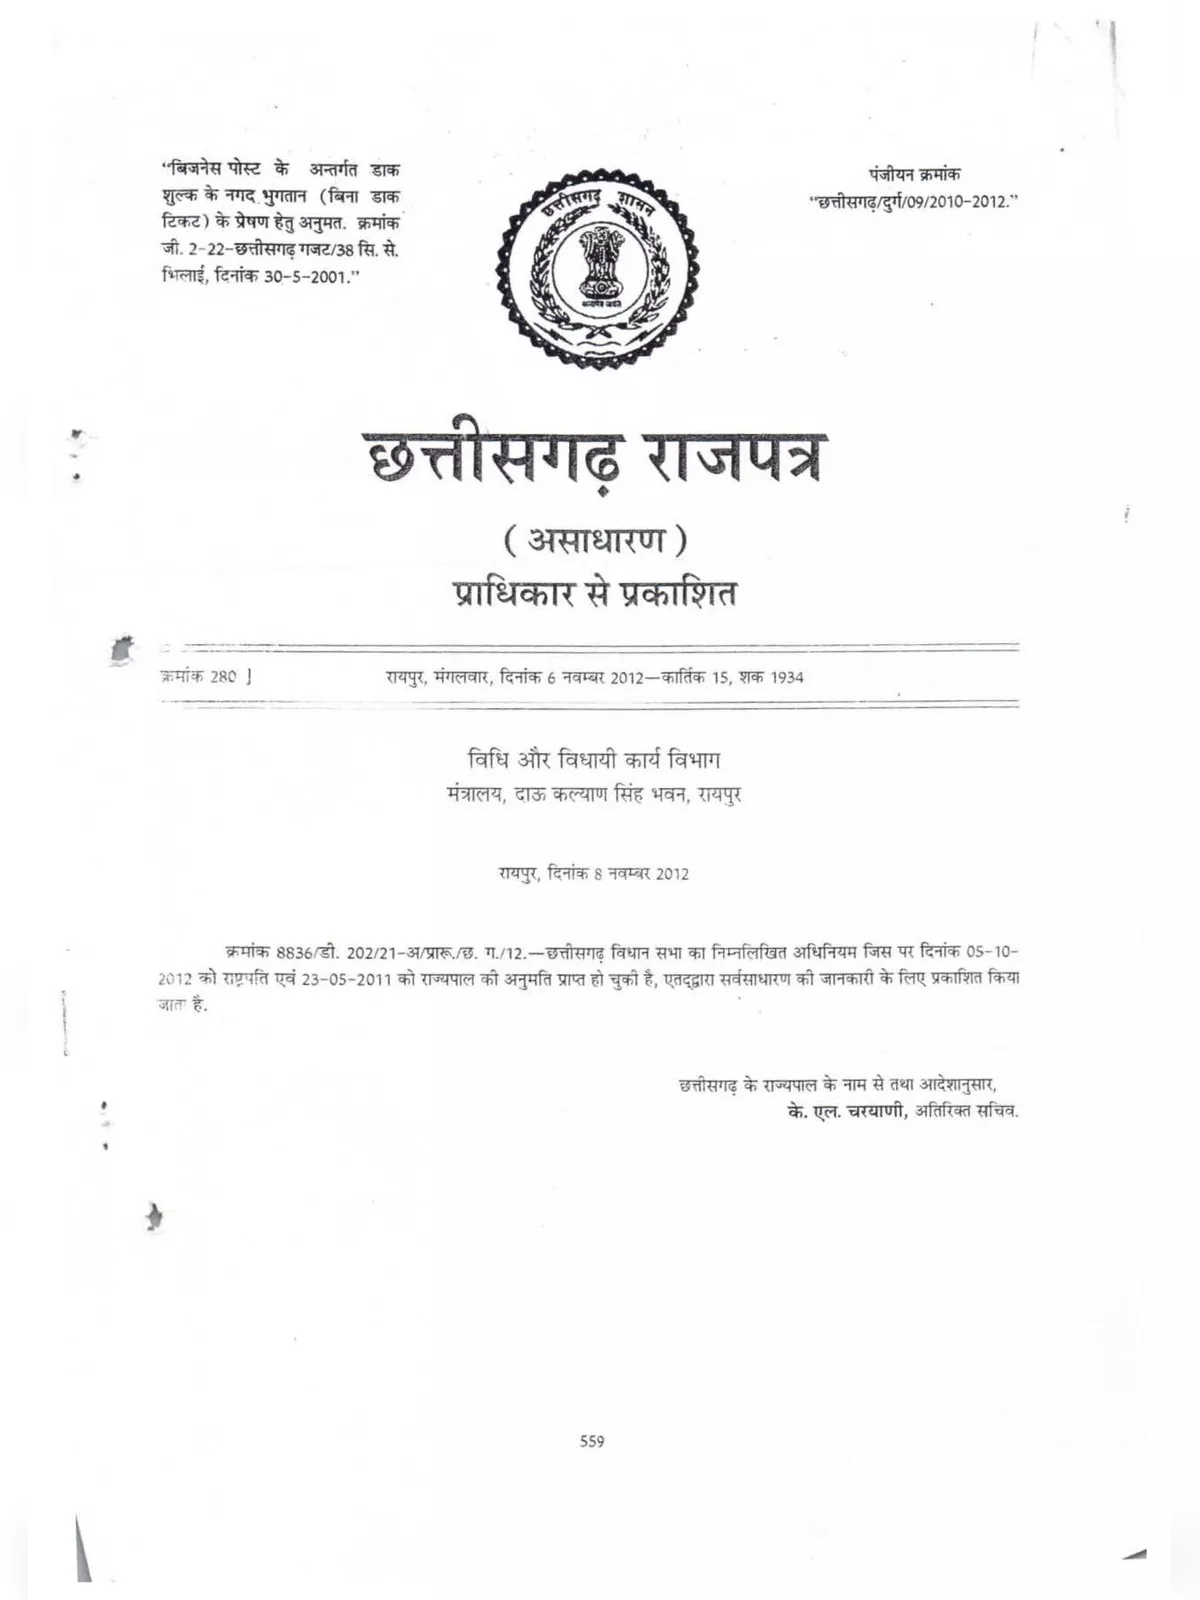 Chhattisgarh Rent Control Act 2011